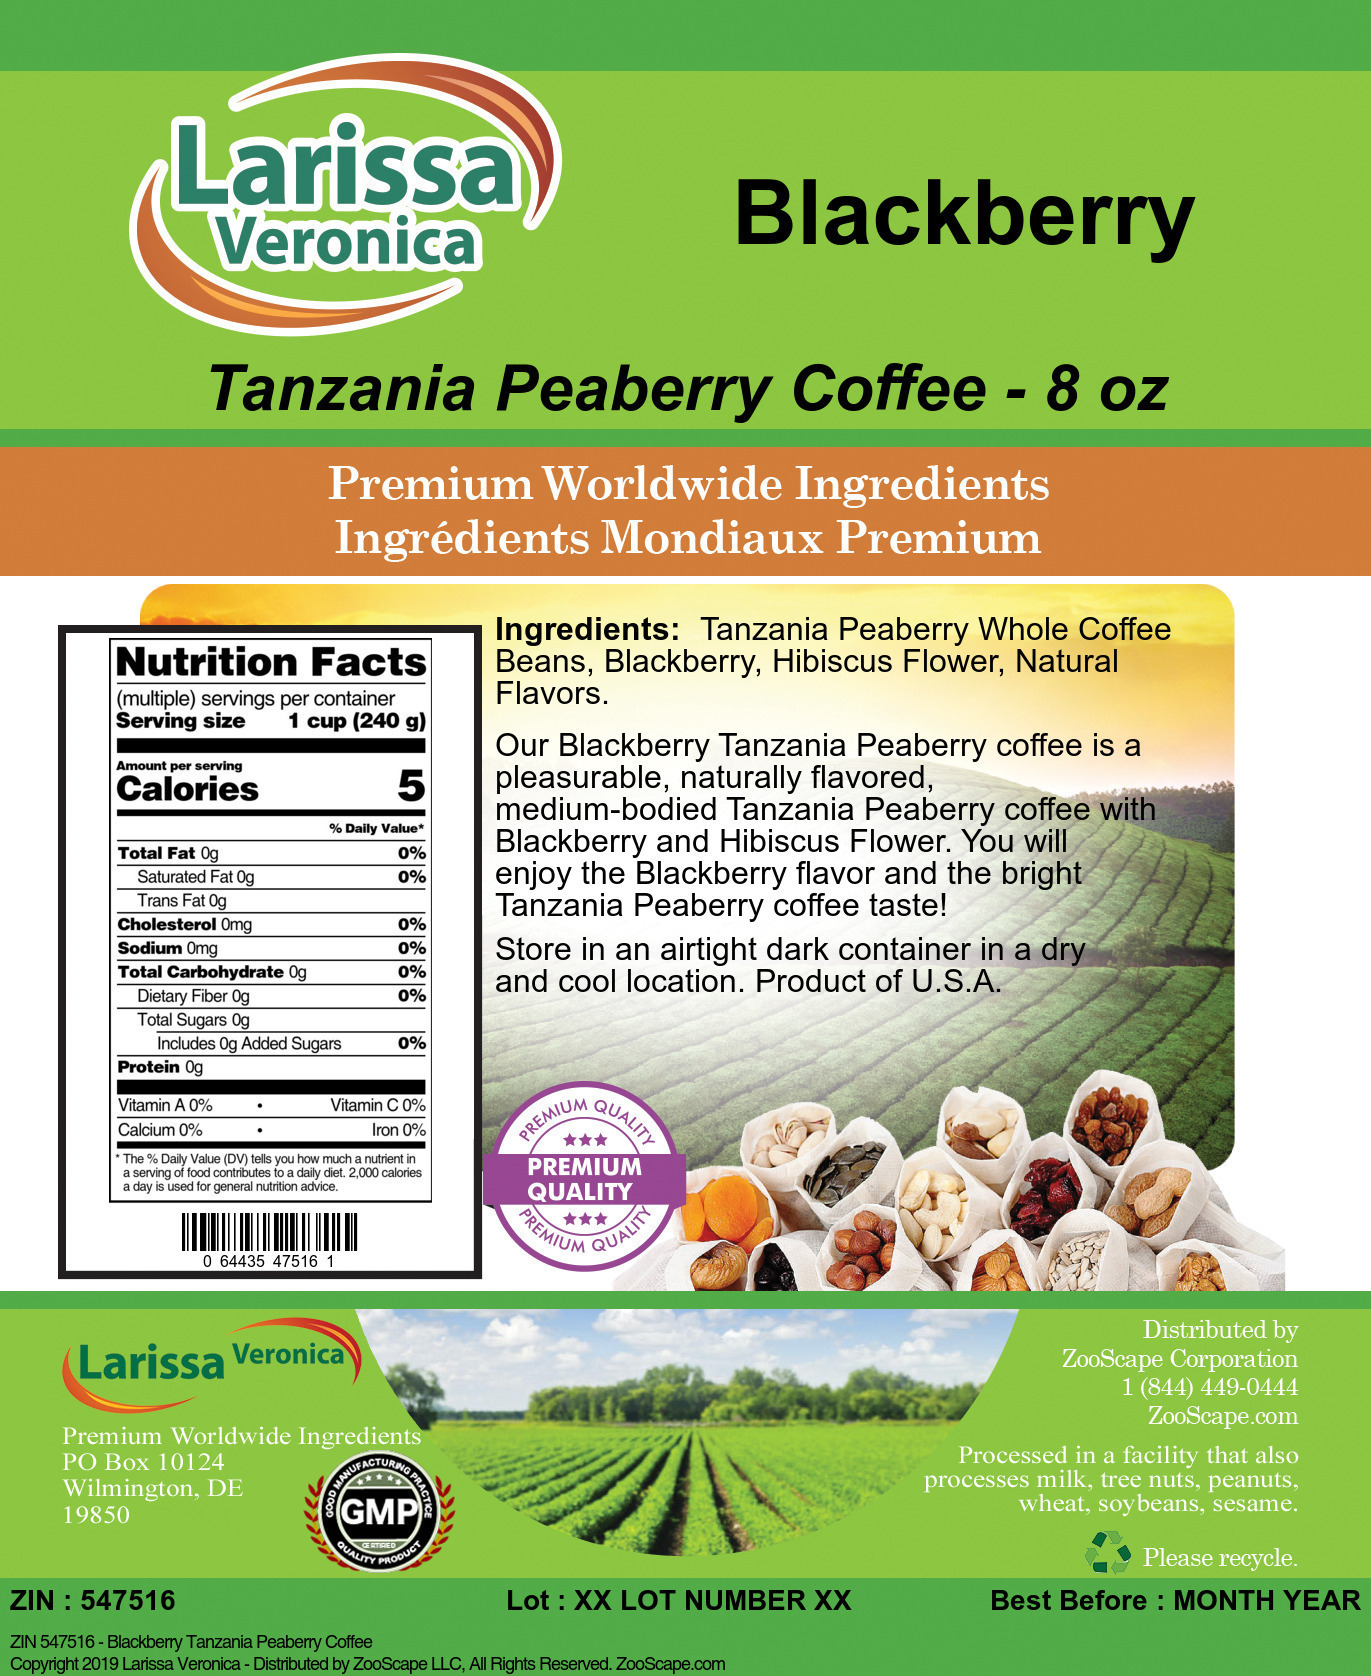 Blackberry Tanzania Peaberry Coffee - Label